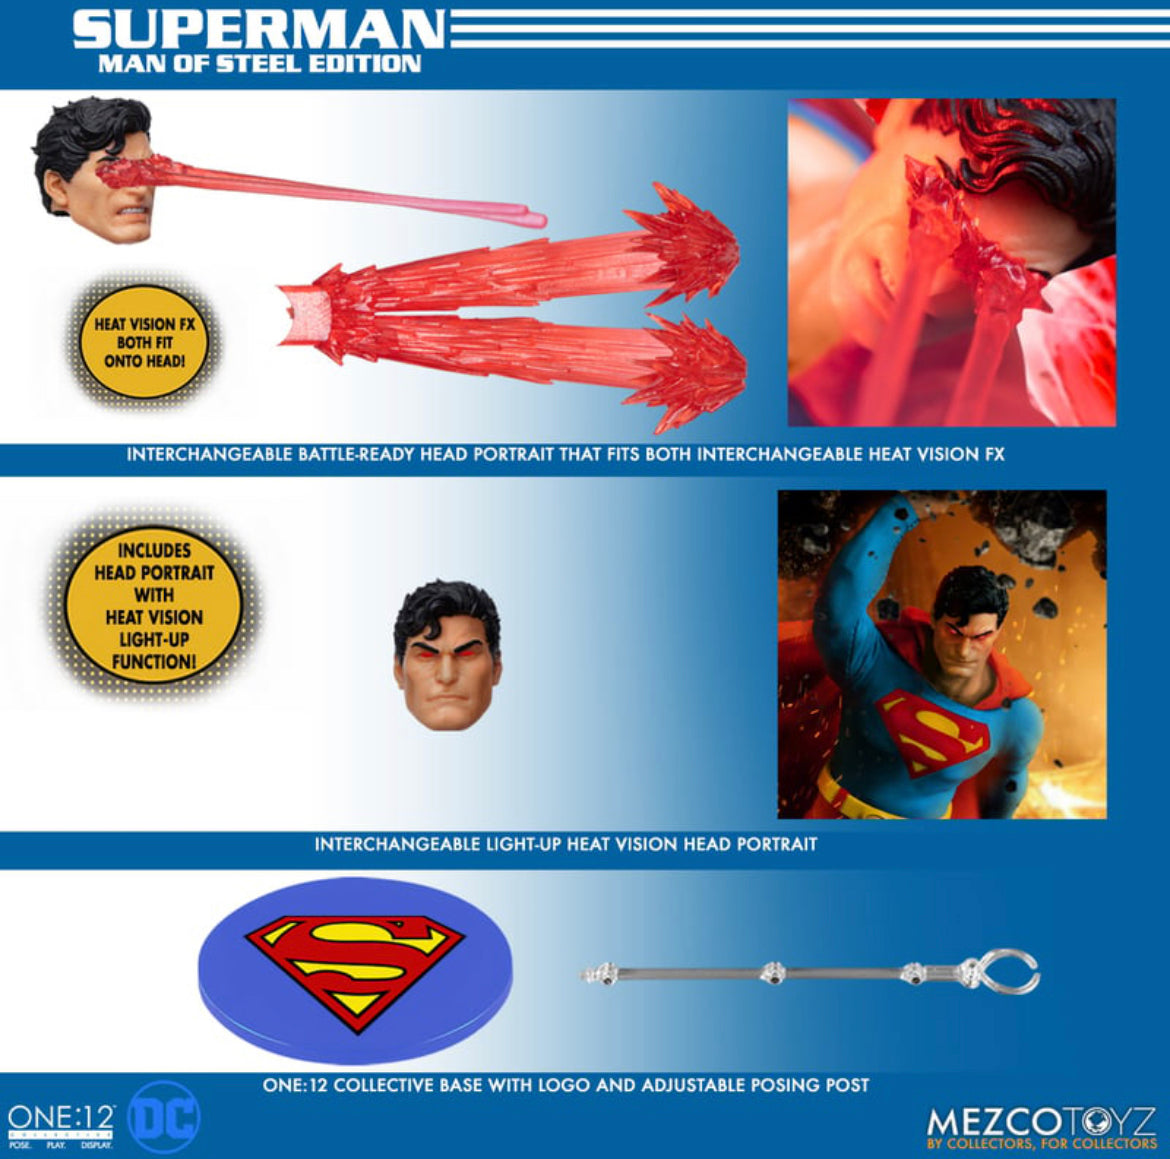 Mezco One:12 Superman Man of steel